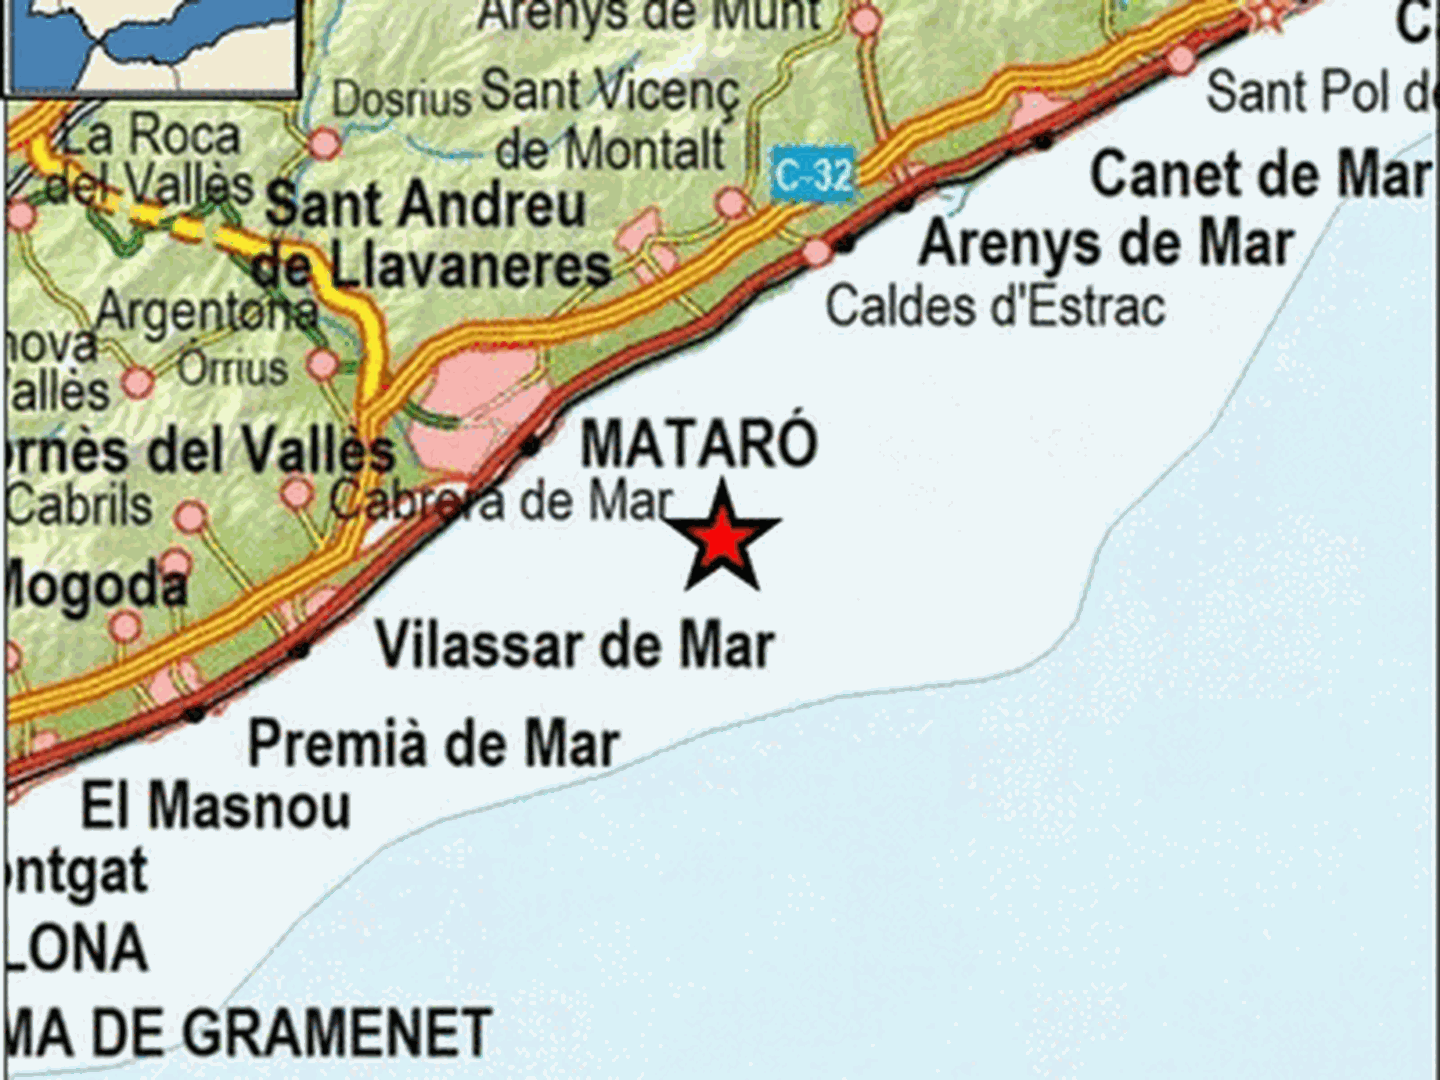 Epicentro del terremoto en las proximidades de Caldes d'Estrac. (IGN)